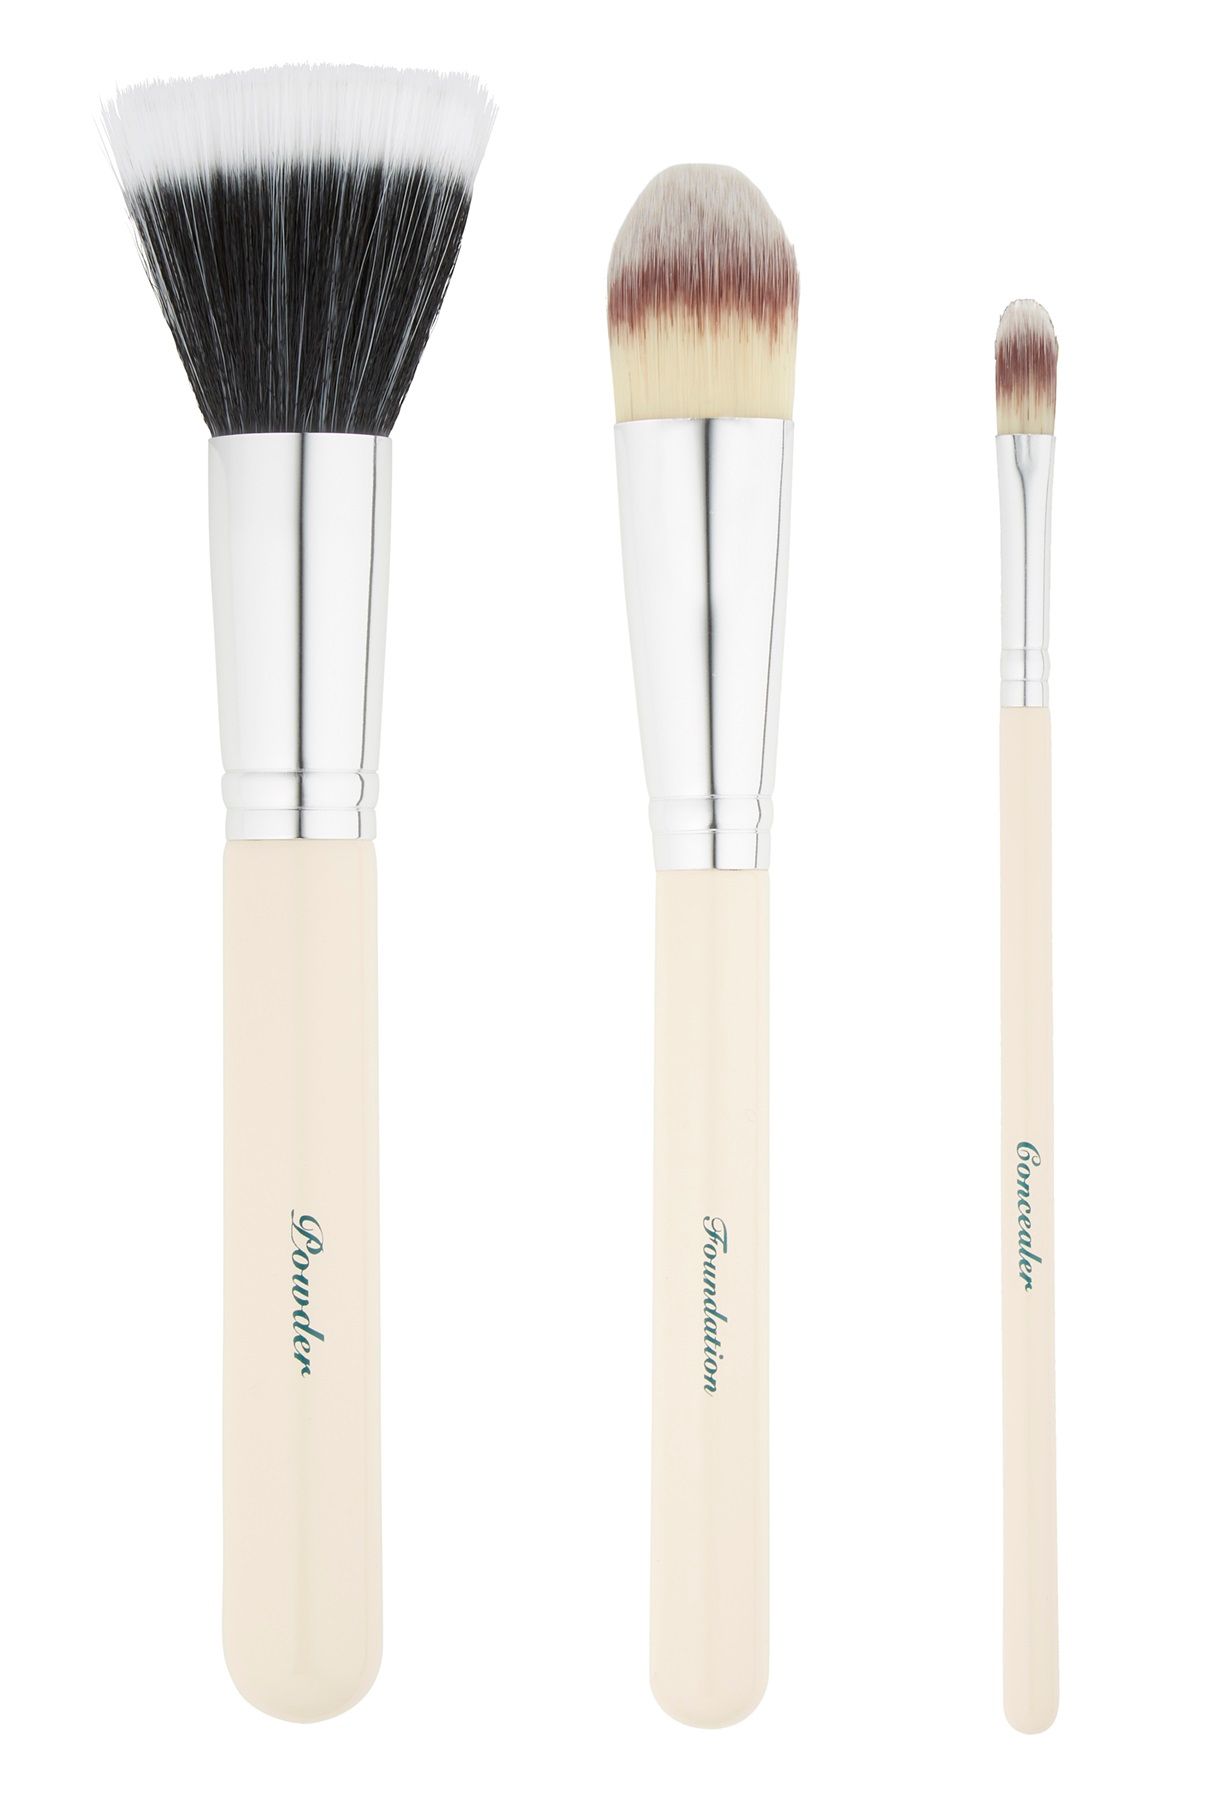 The Vintage Cosmetic Company Airbrush Make-Up Brush Set